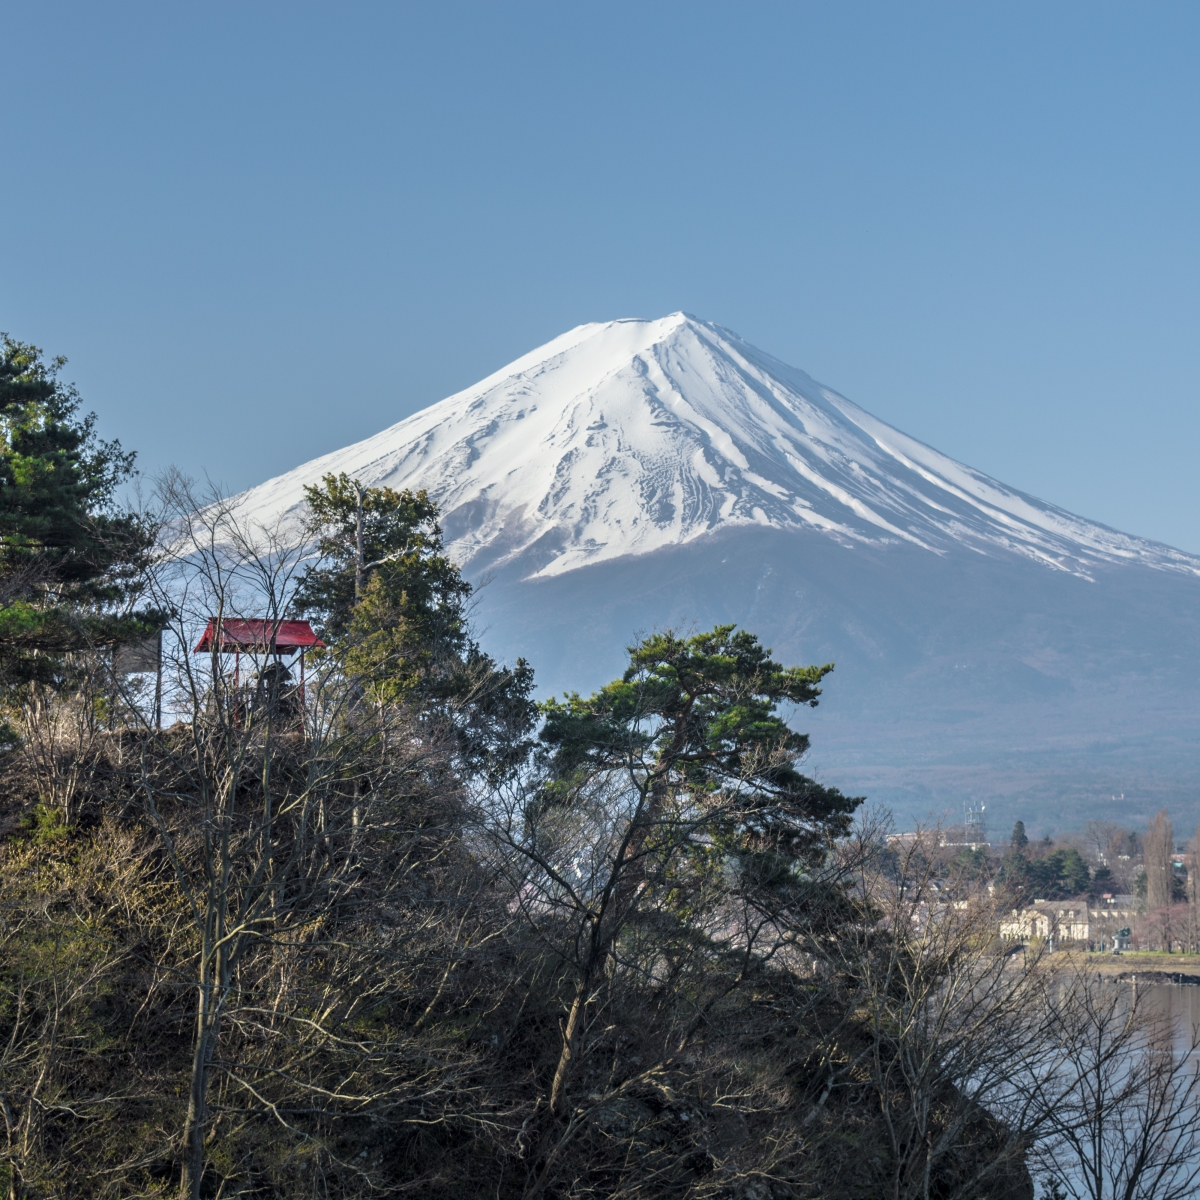 Get the best views of Mount Fuji around Kawaguchiko